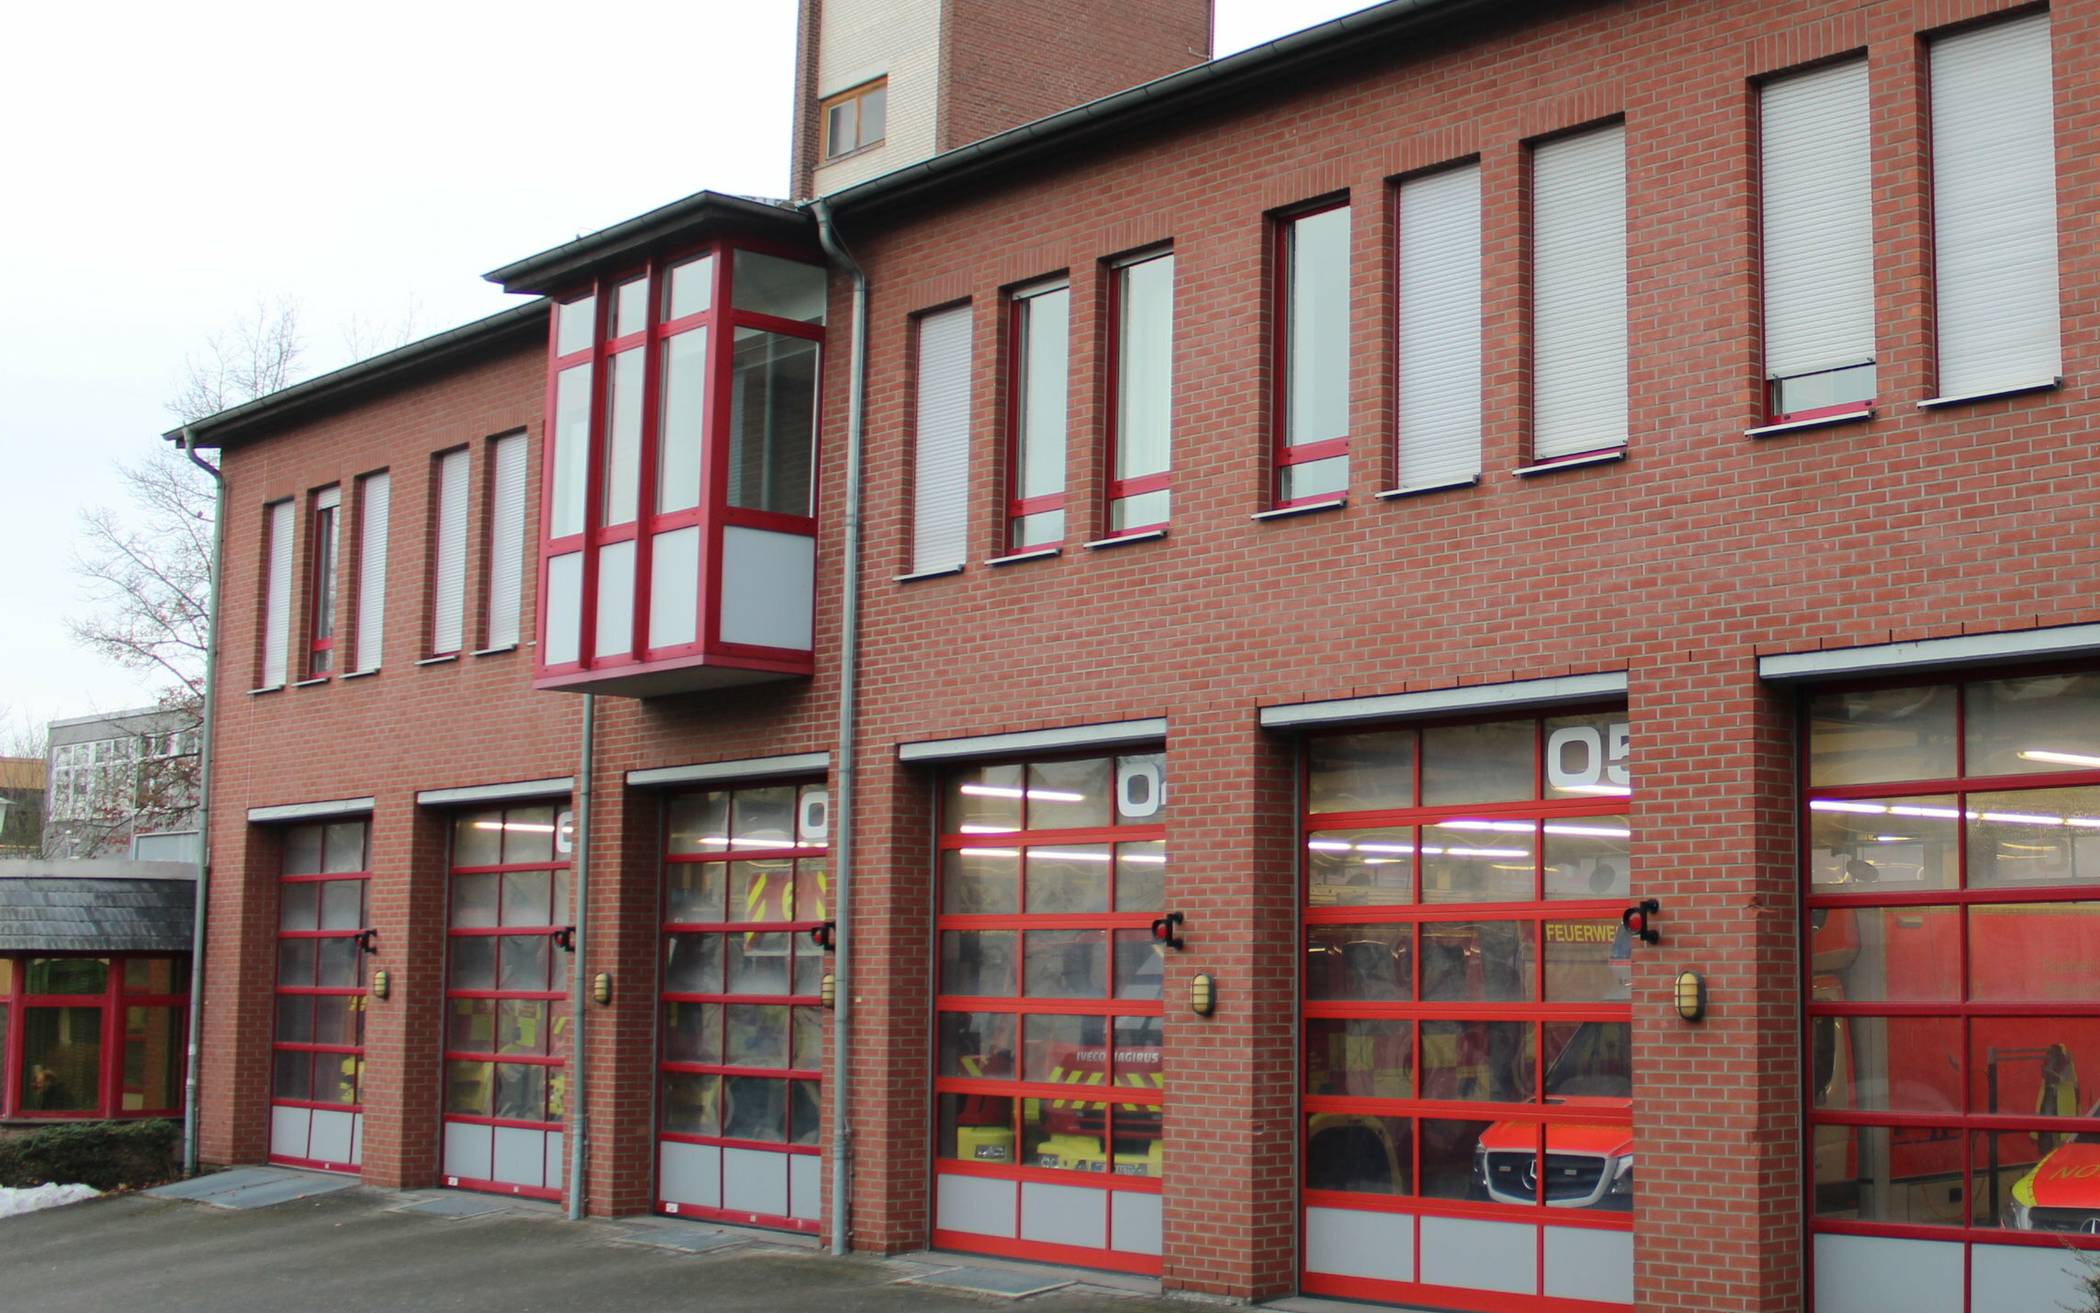  Feuerwehrstandort an der Laubacher Straße. 